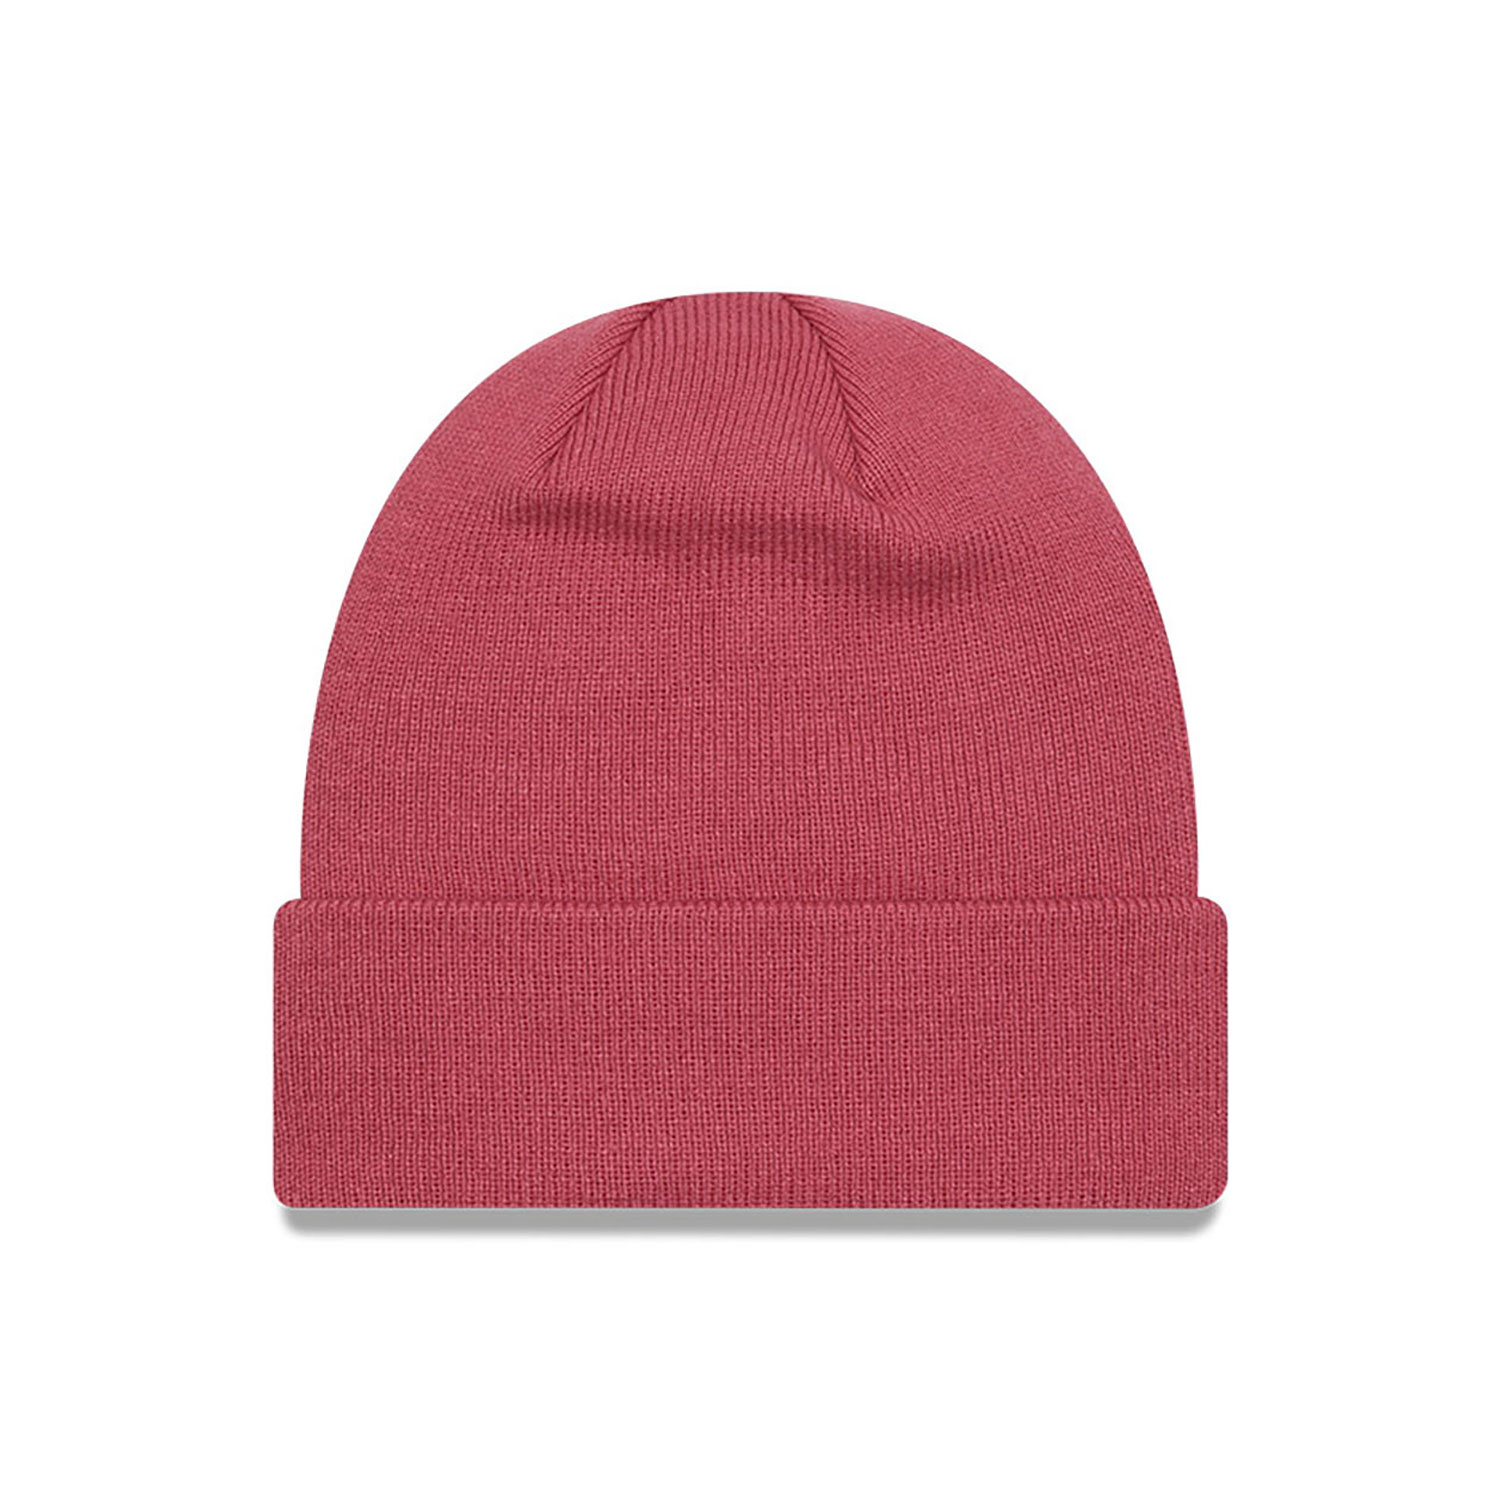 Manchester United FC Pink Cuff Knit Beanie Hat